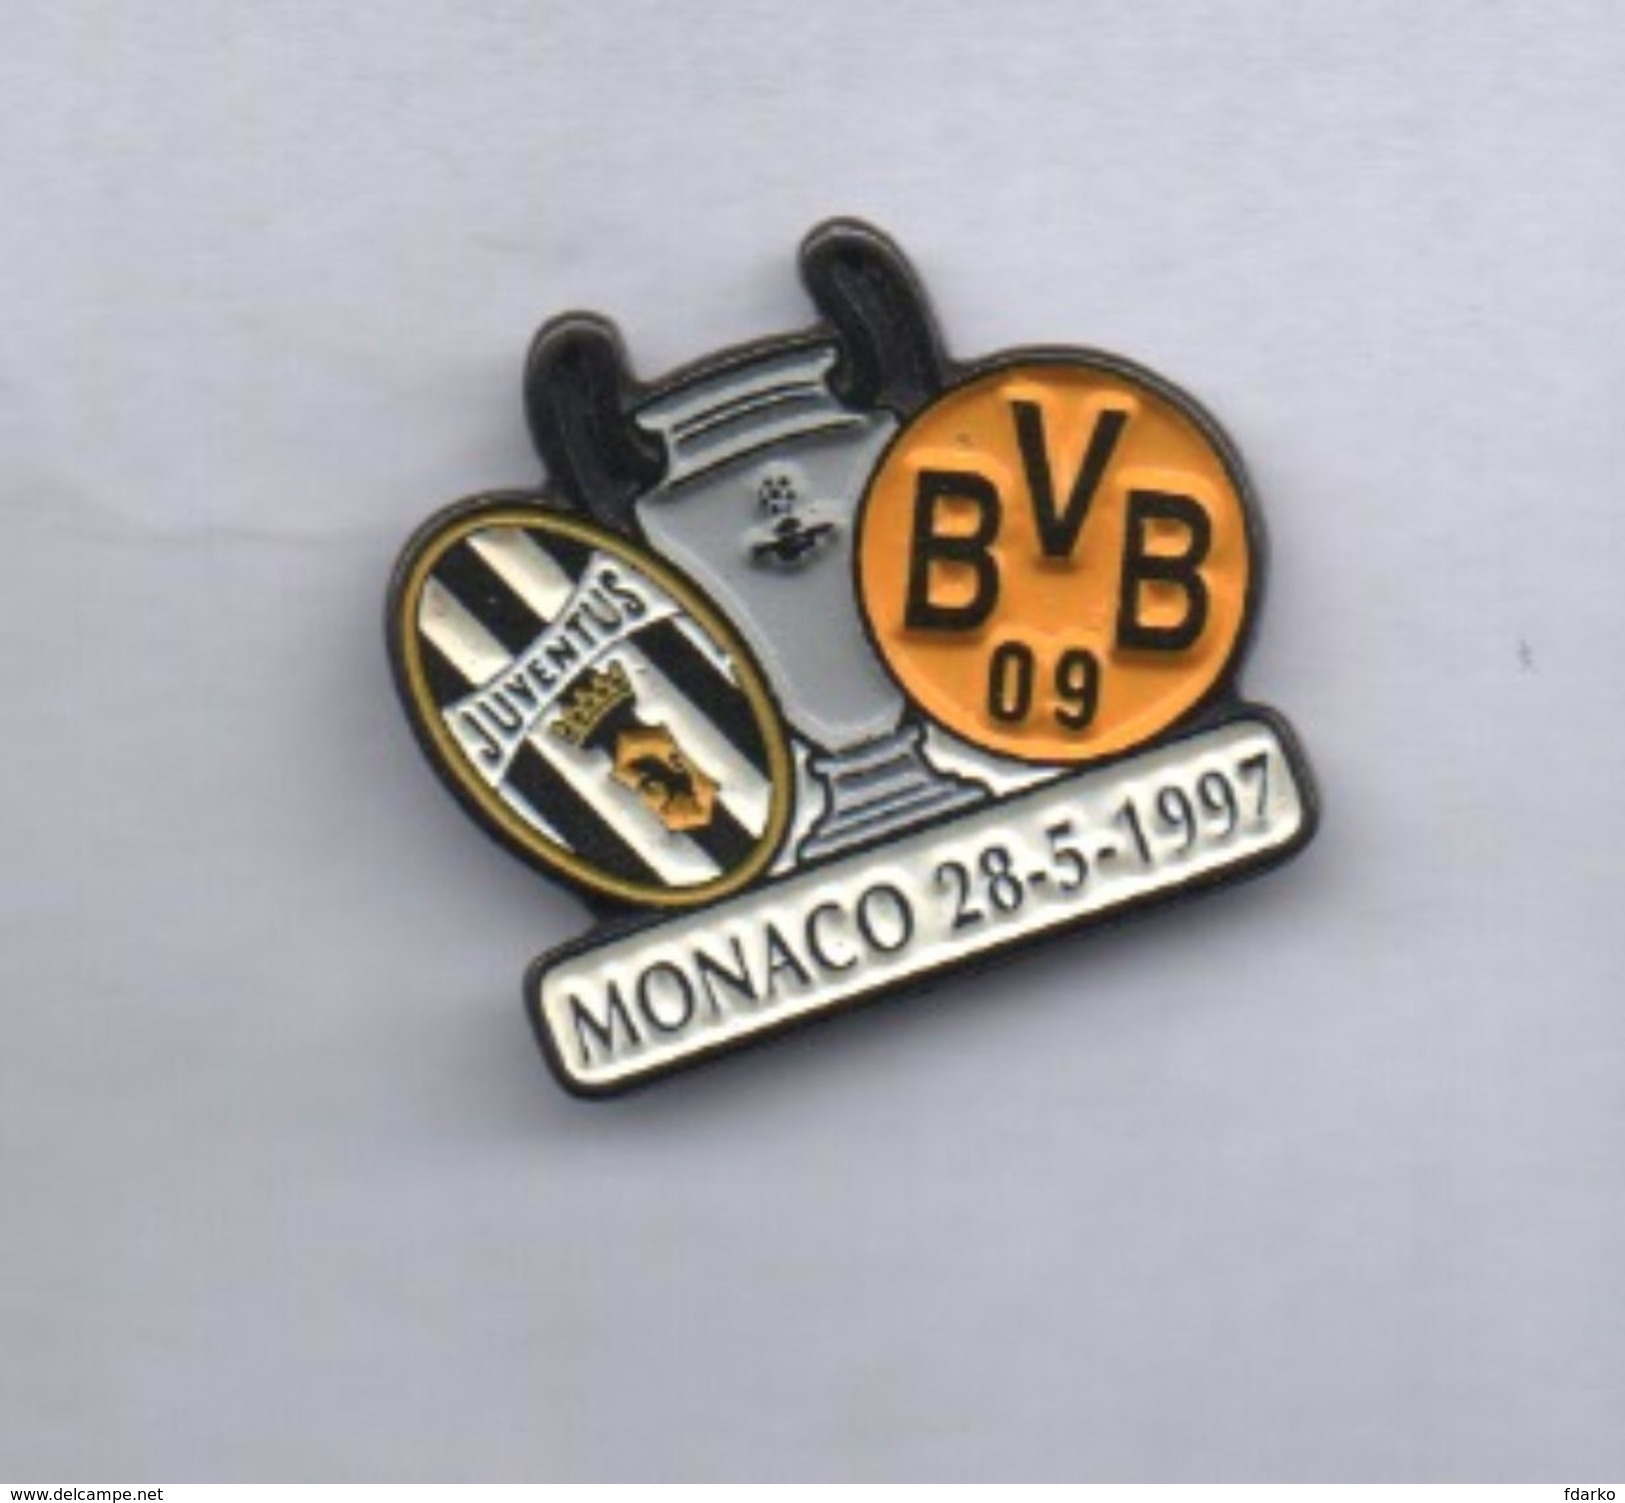 Finale Coppa UEFA Champions League 1996-199 Juve BVB Monaco 28/5/1997 BiancoNero Football Pins Juventus Ufficiale - Voetbal